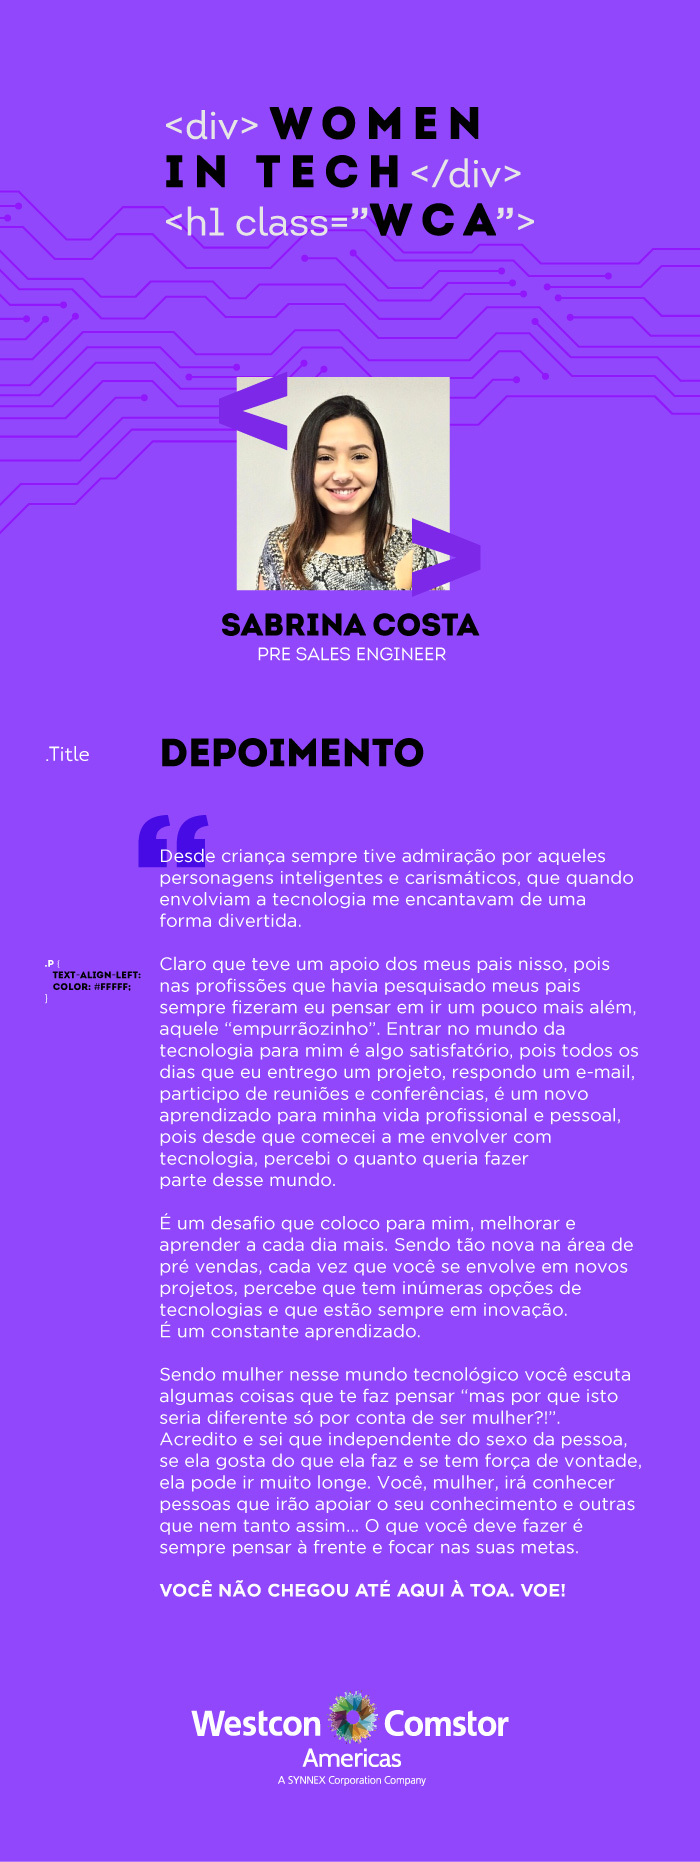 WOMEN IN TECH - Sabrina Costa